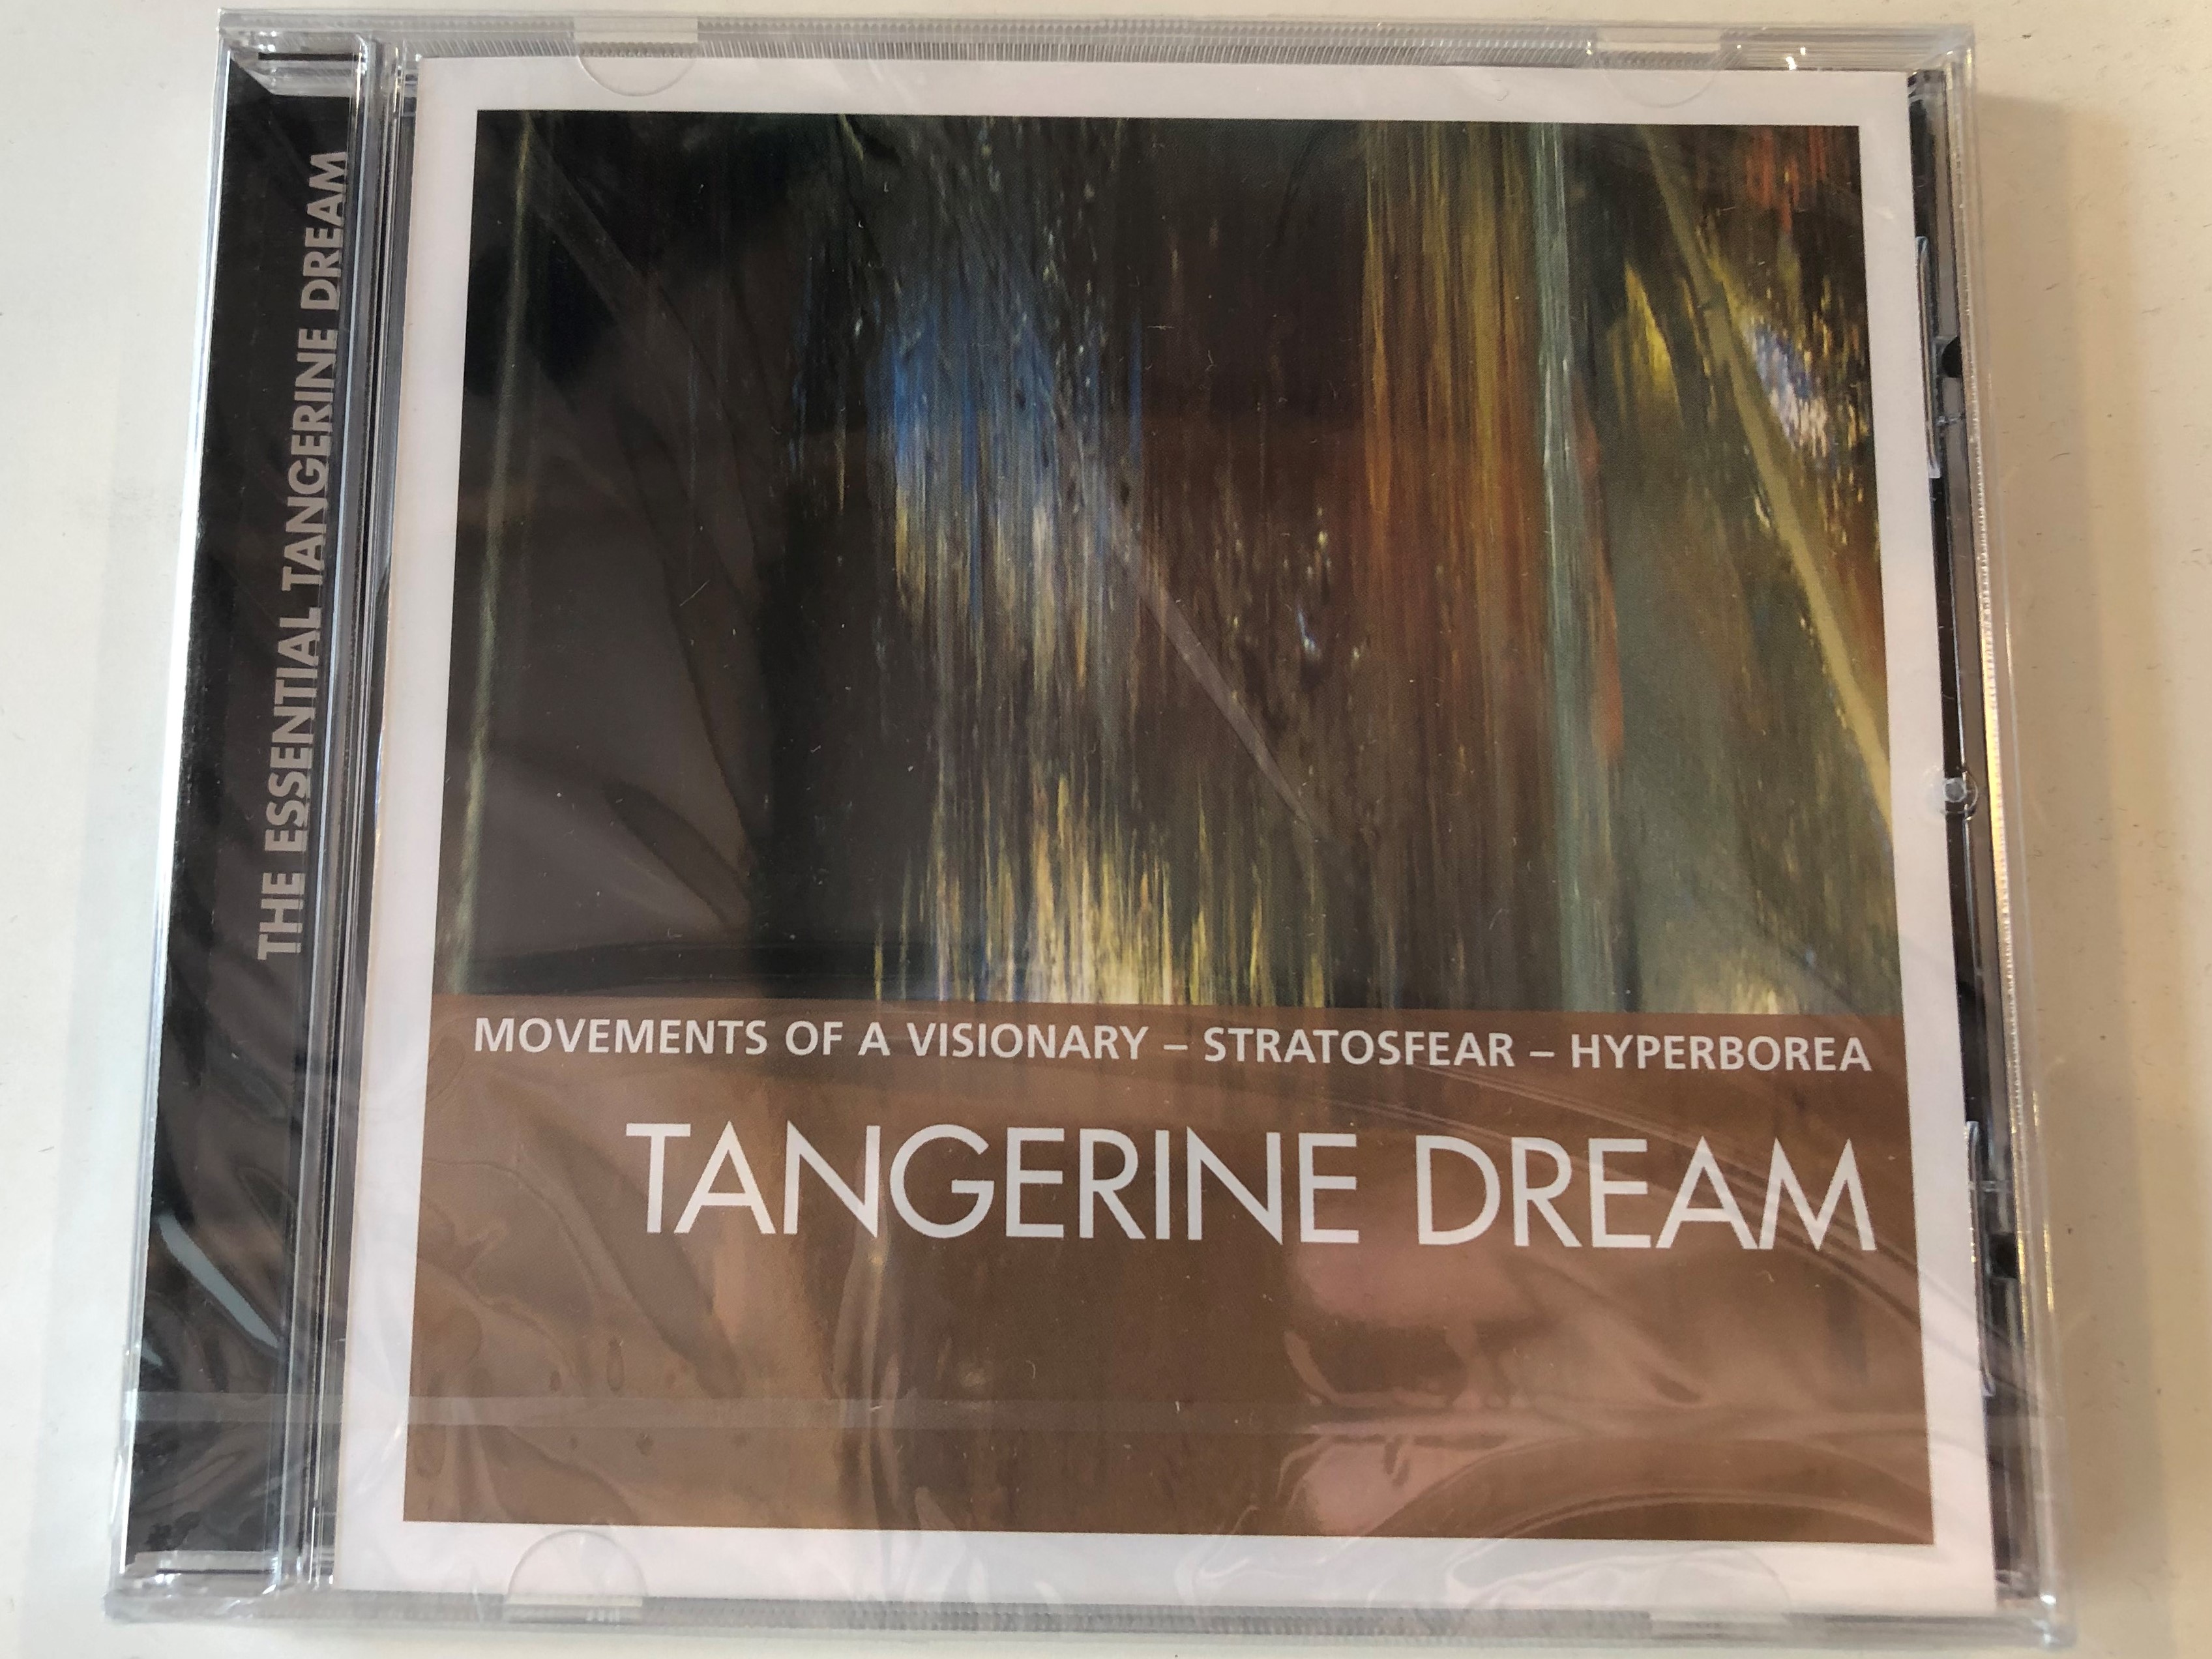 tangerine-dream-the-essential-tangerine-dream-movements-of-a-visionary-stratosfear-hyperborea-virgin-music-germany-audio-cd-2006-00946-3-43983-2-9-1-.jpg